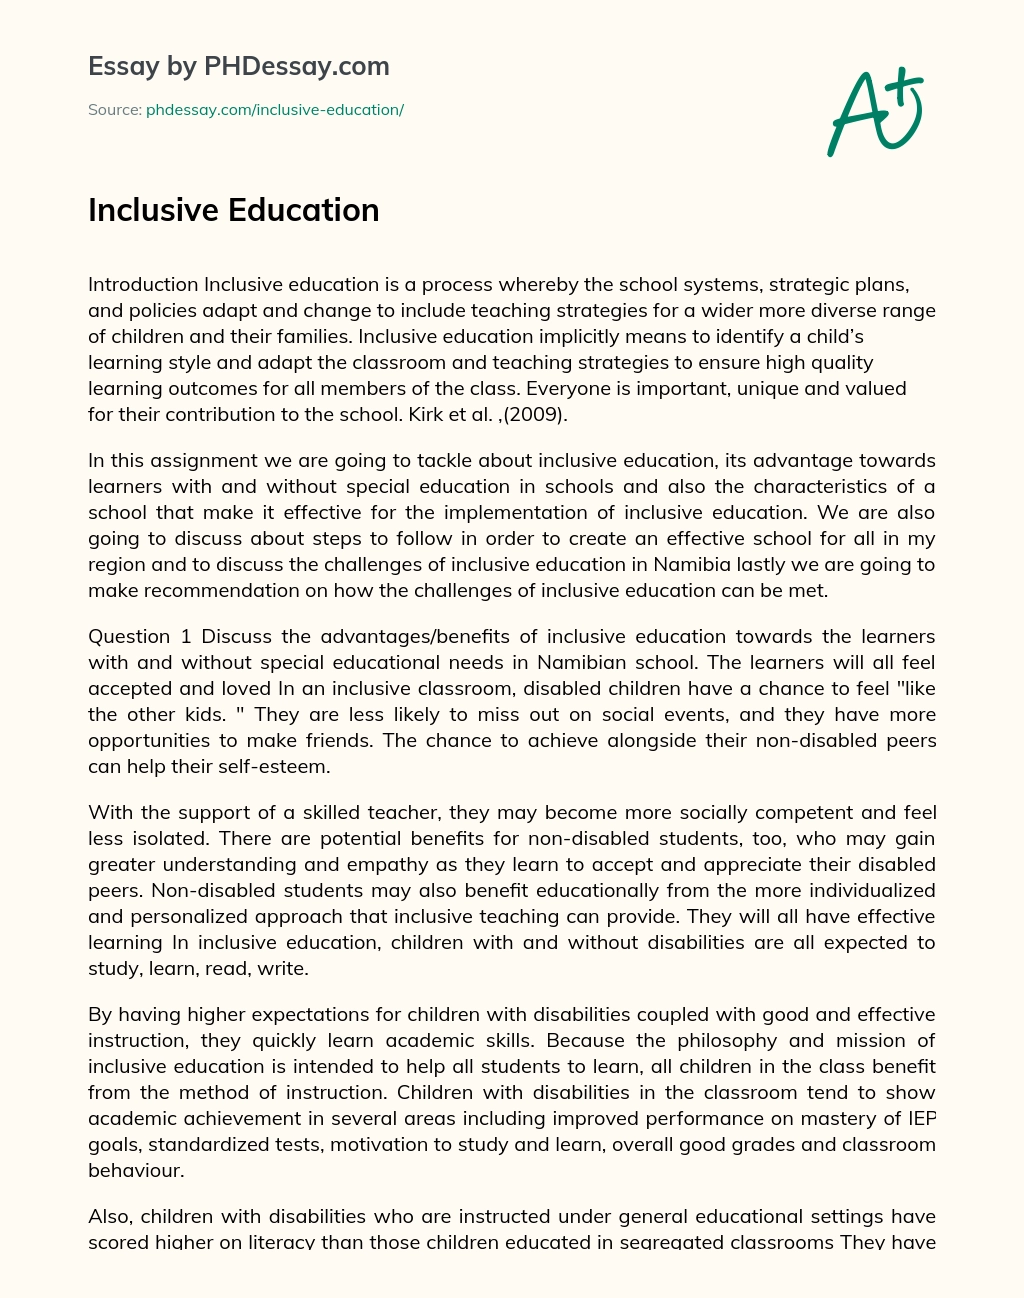 Inclusive Education essay